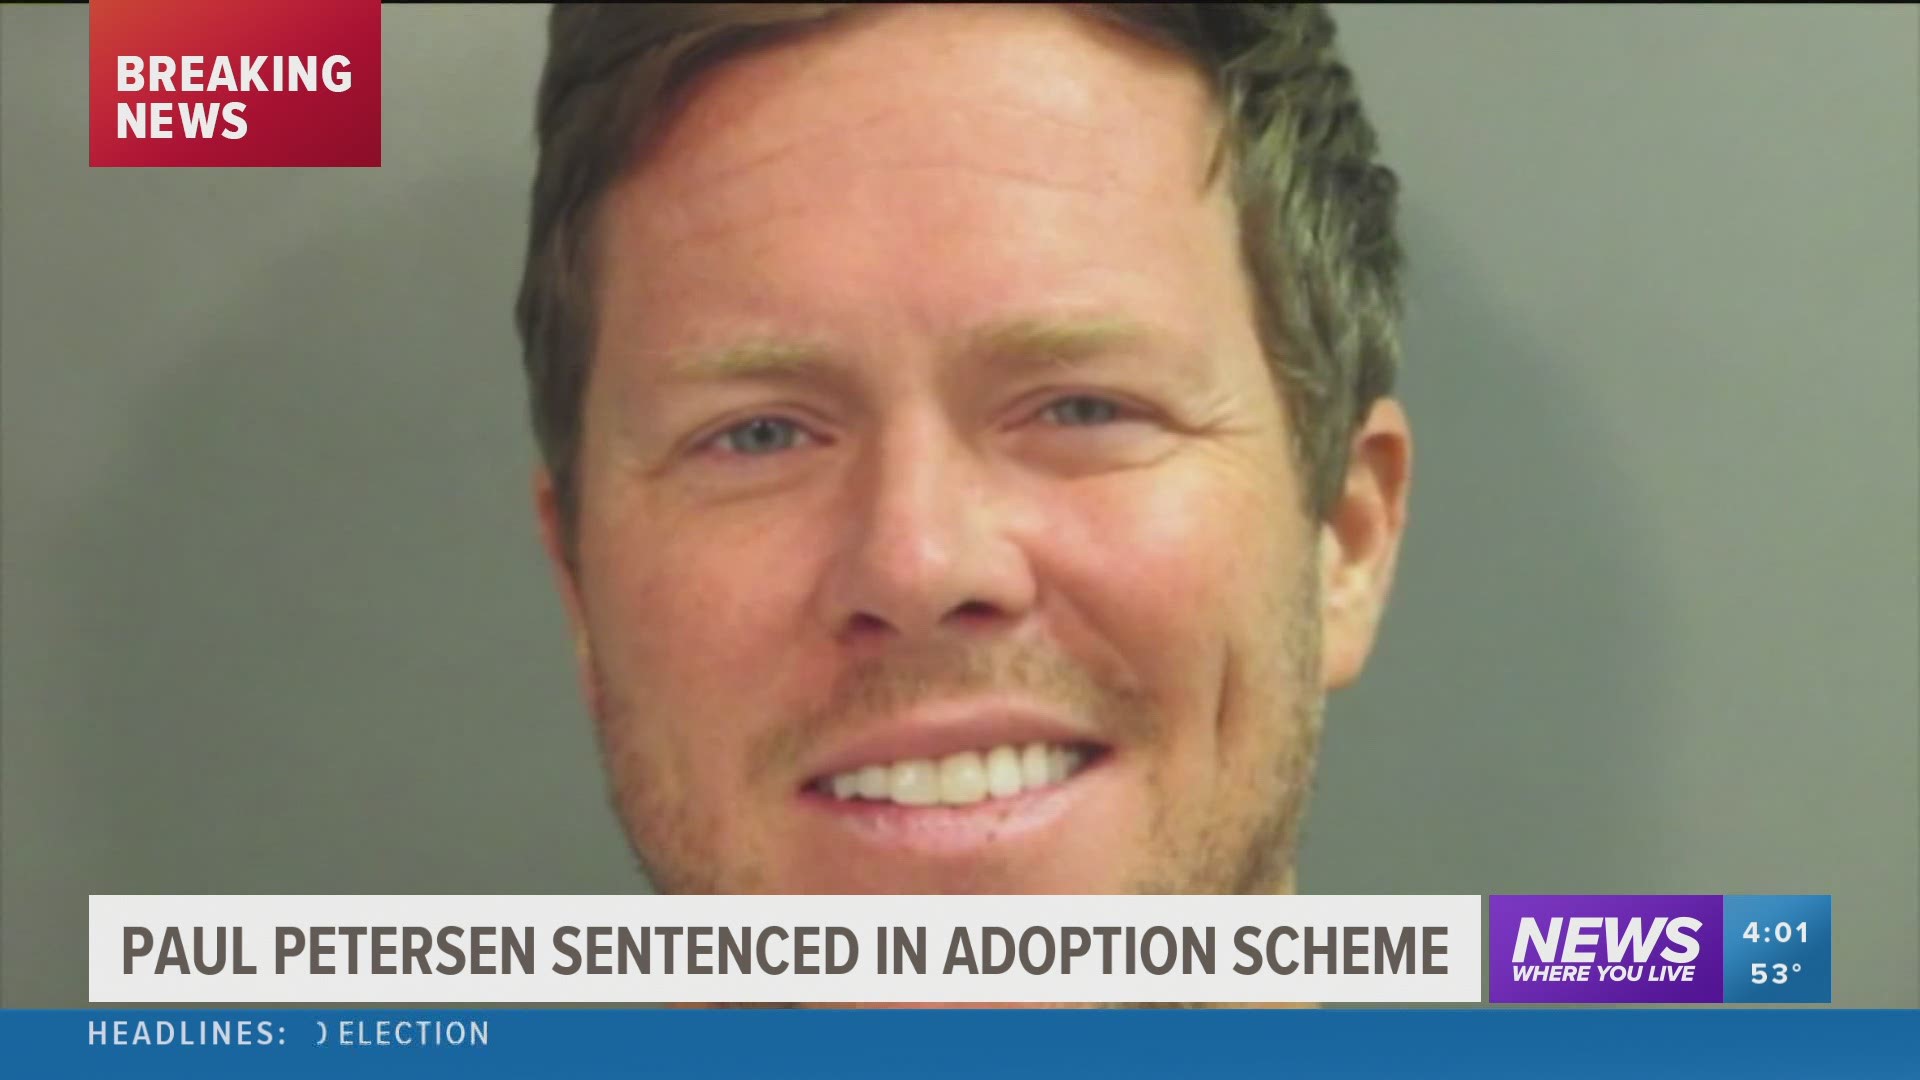 Paul Petersen sentenced in adoption scheme